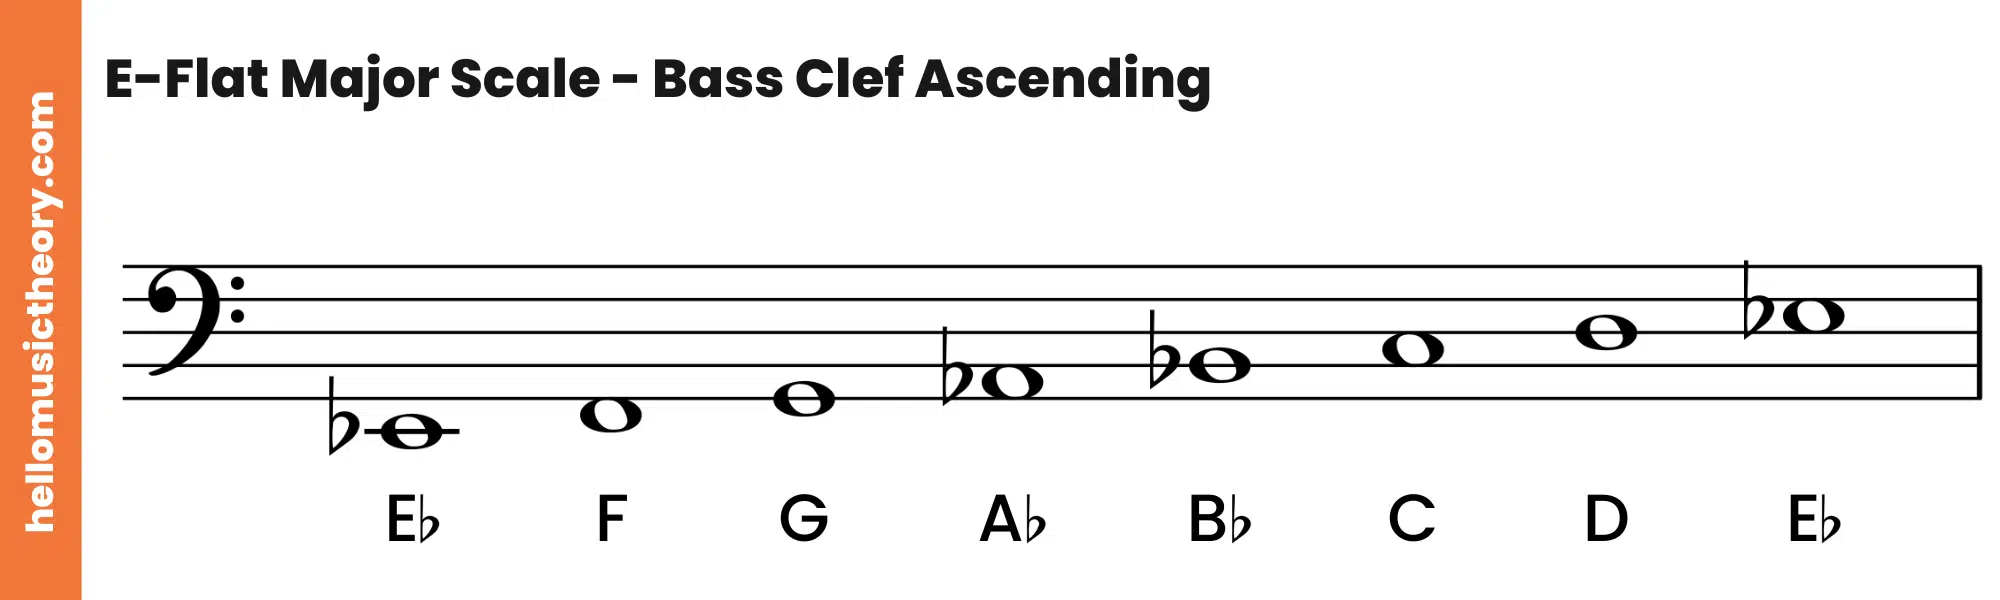 E-Flat Major Scale Bass Clef Ascending